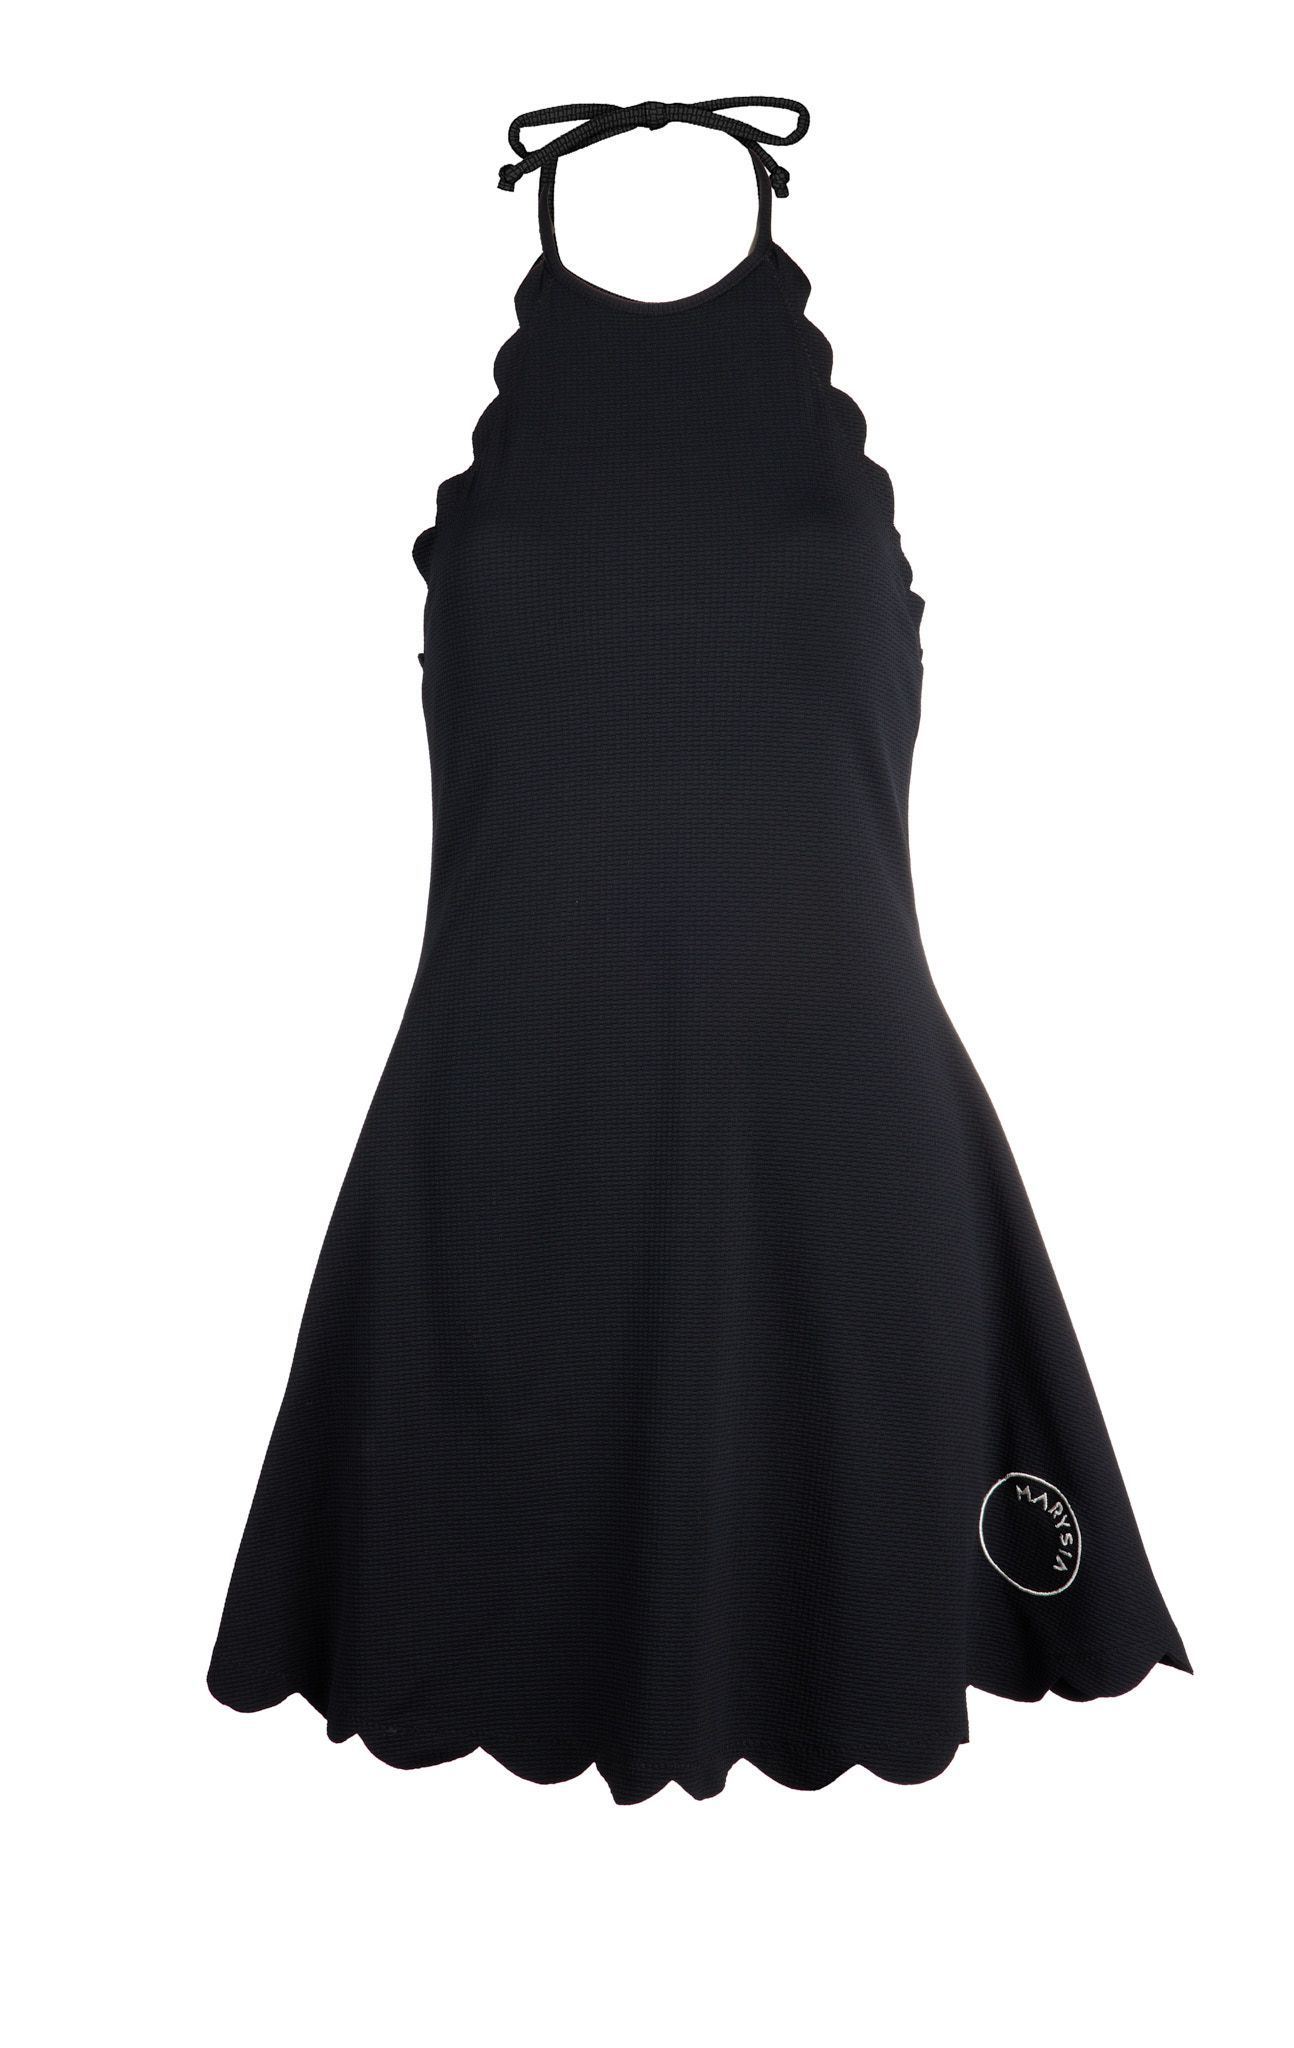 SPORTCLEAN Bianca Dress in Black